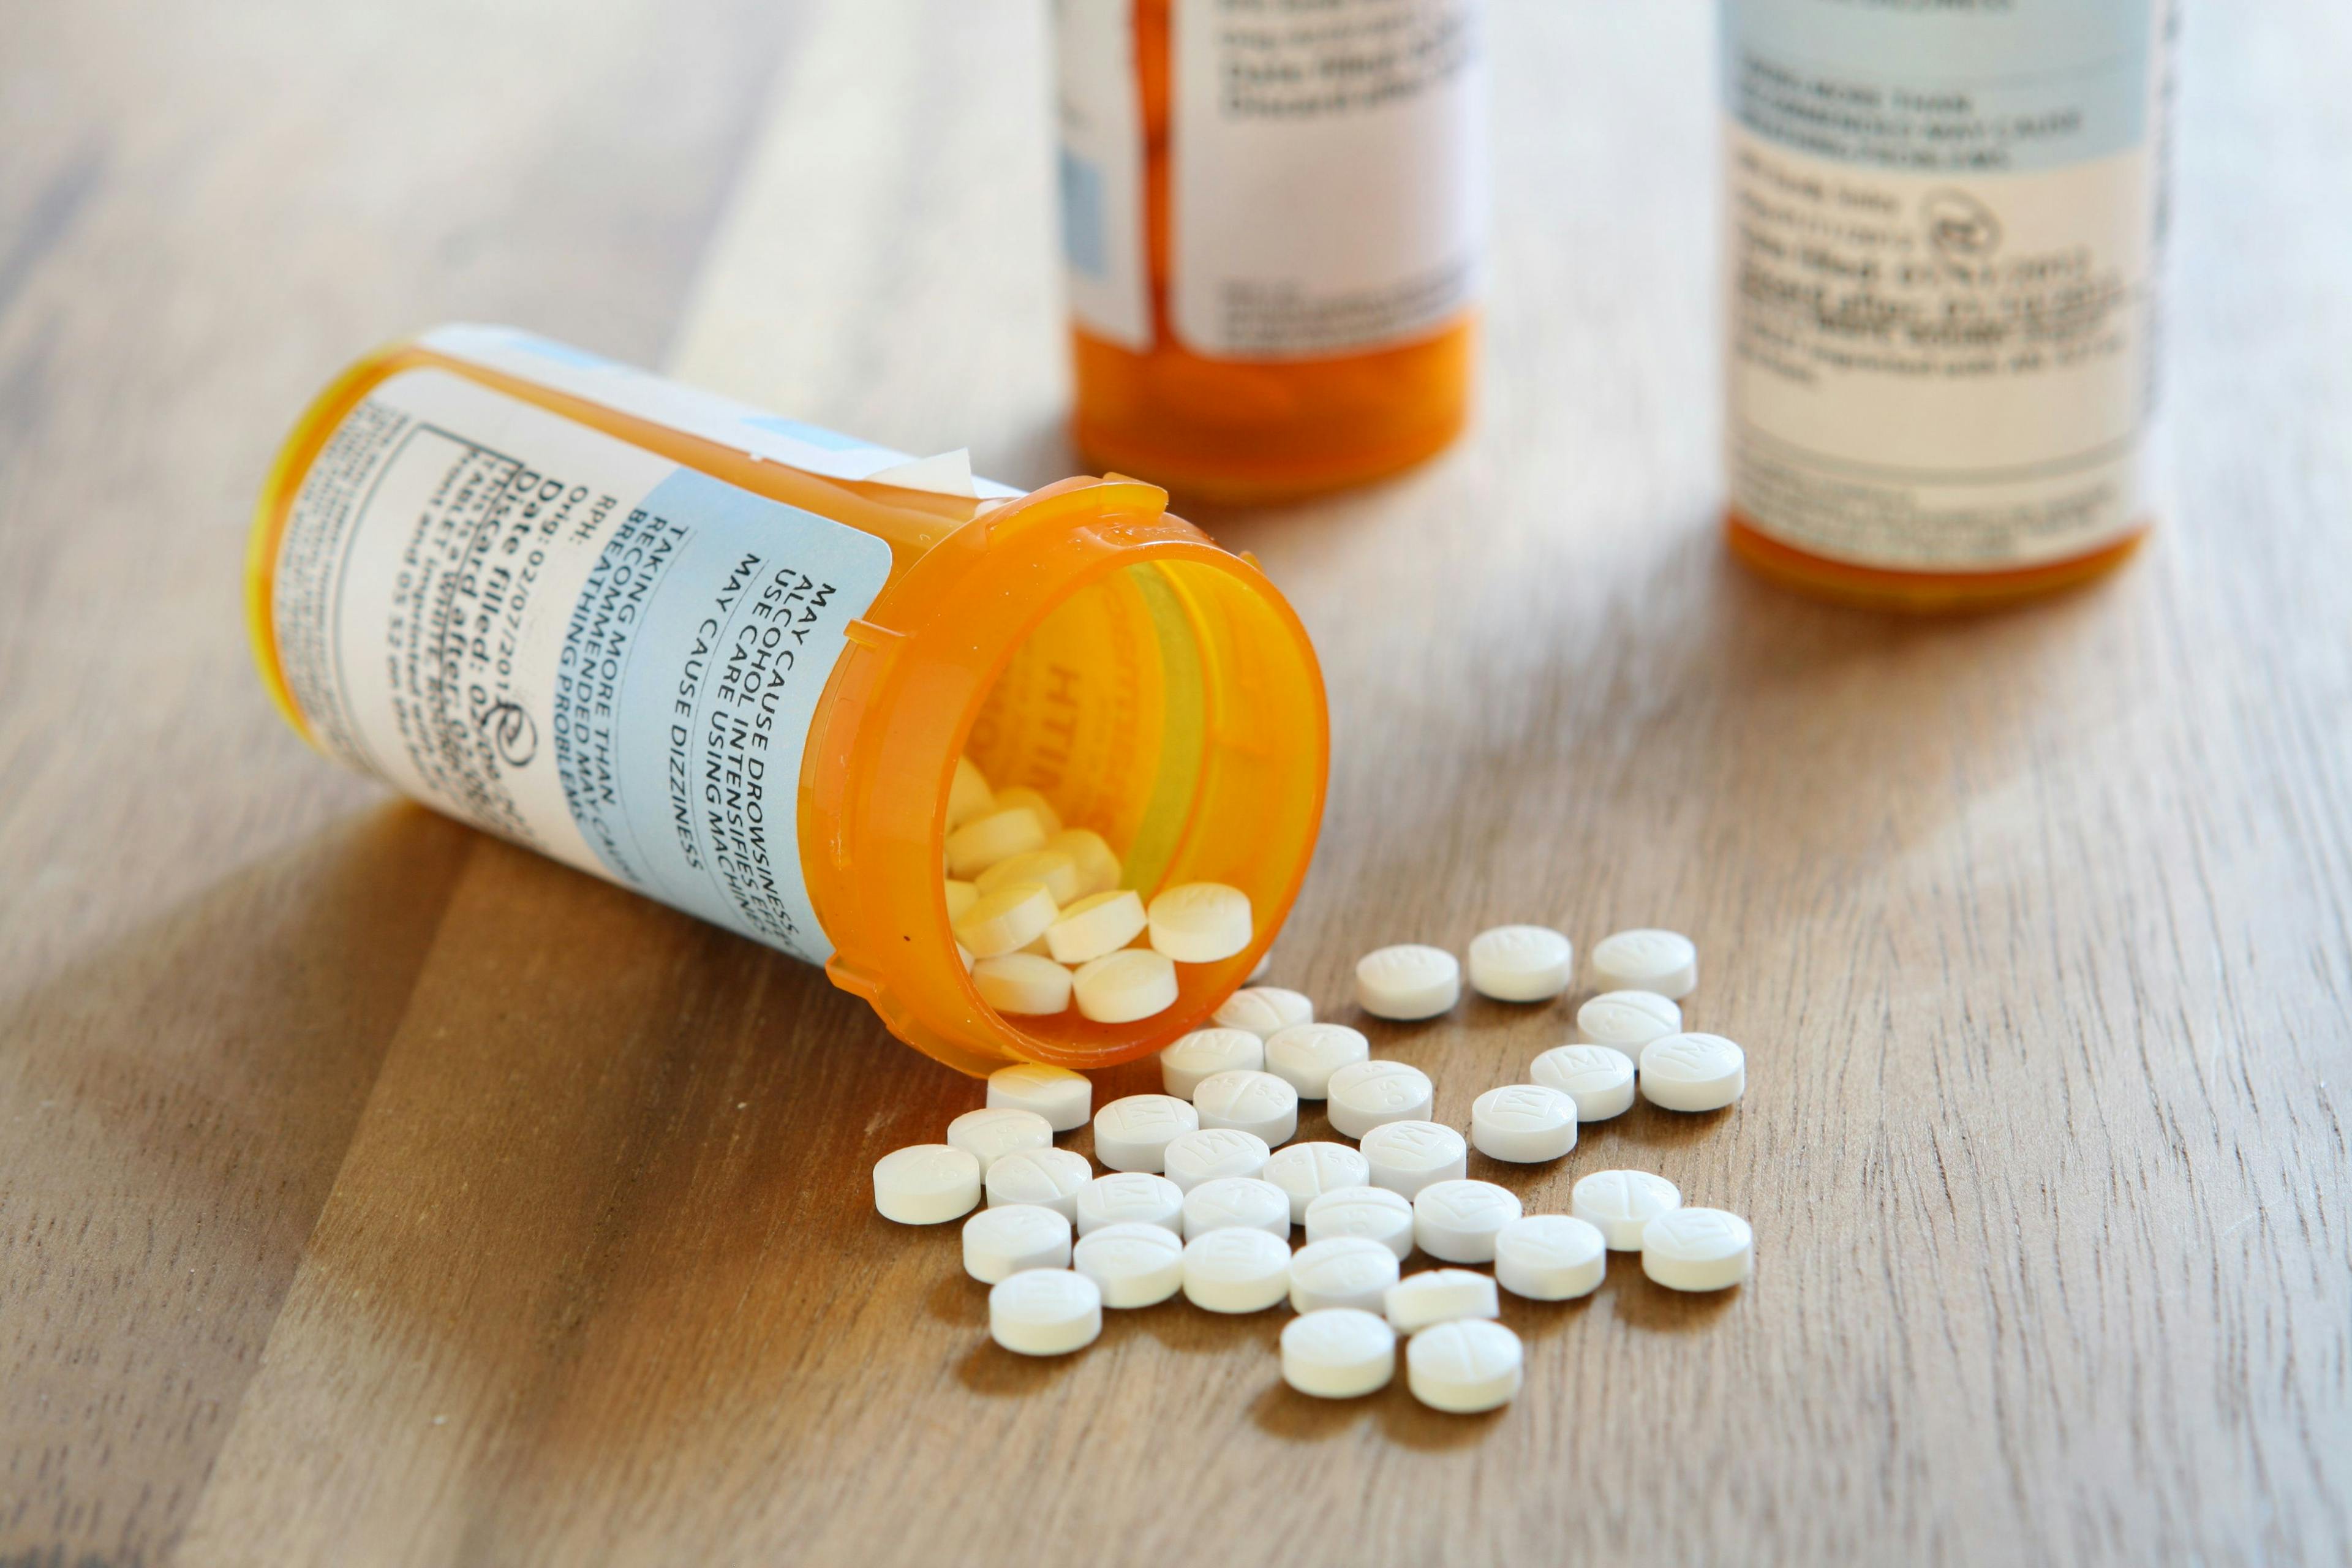 Prescription medication -- Image credit: JJAVA | stock.adobe.com